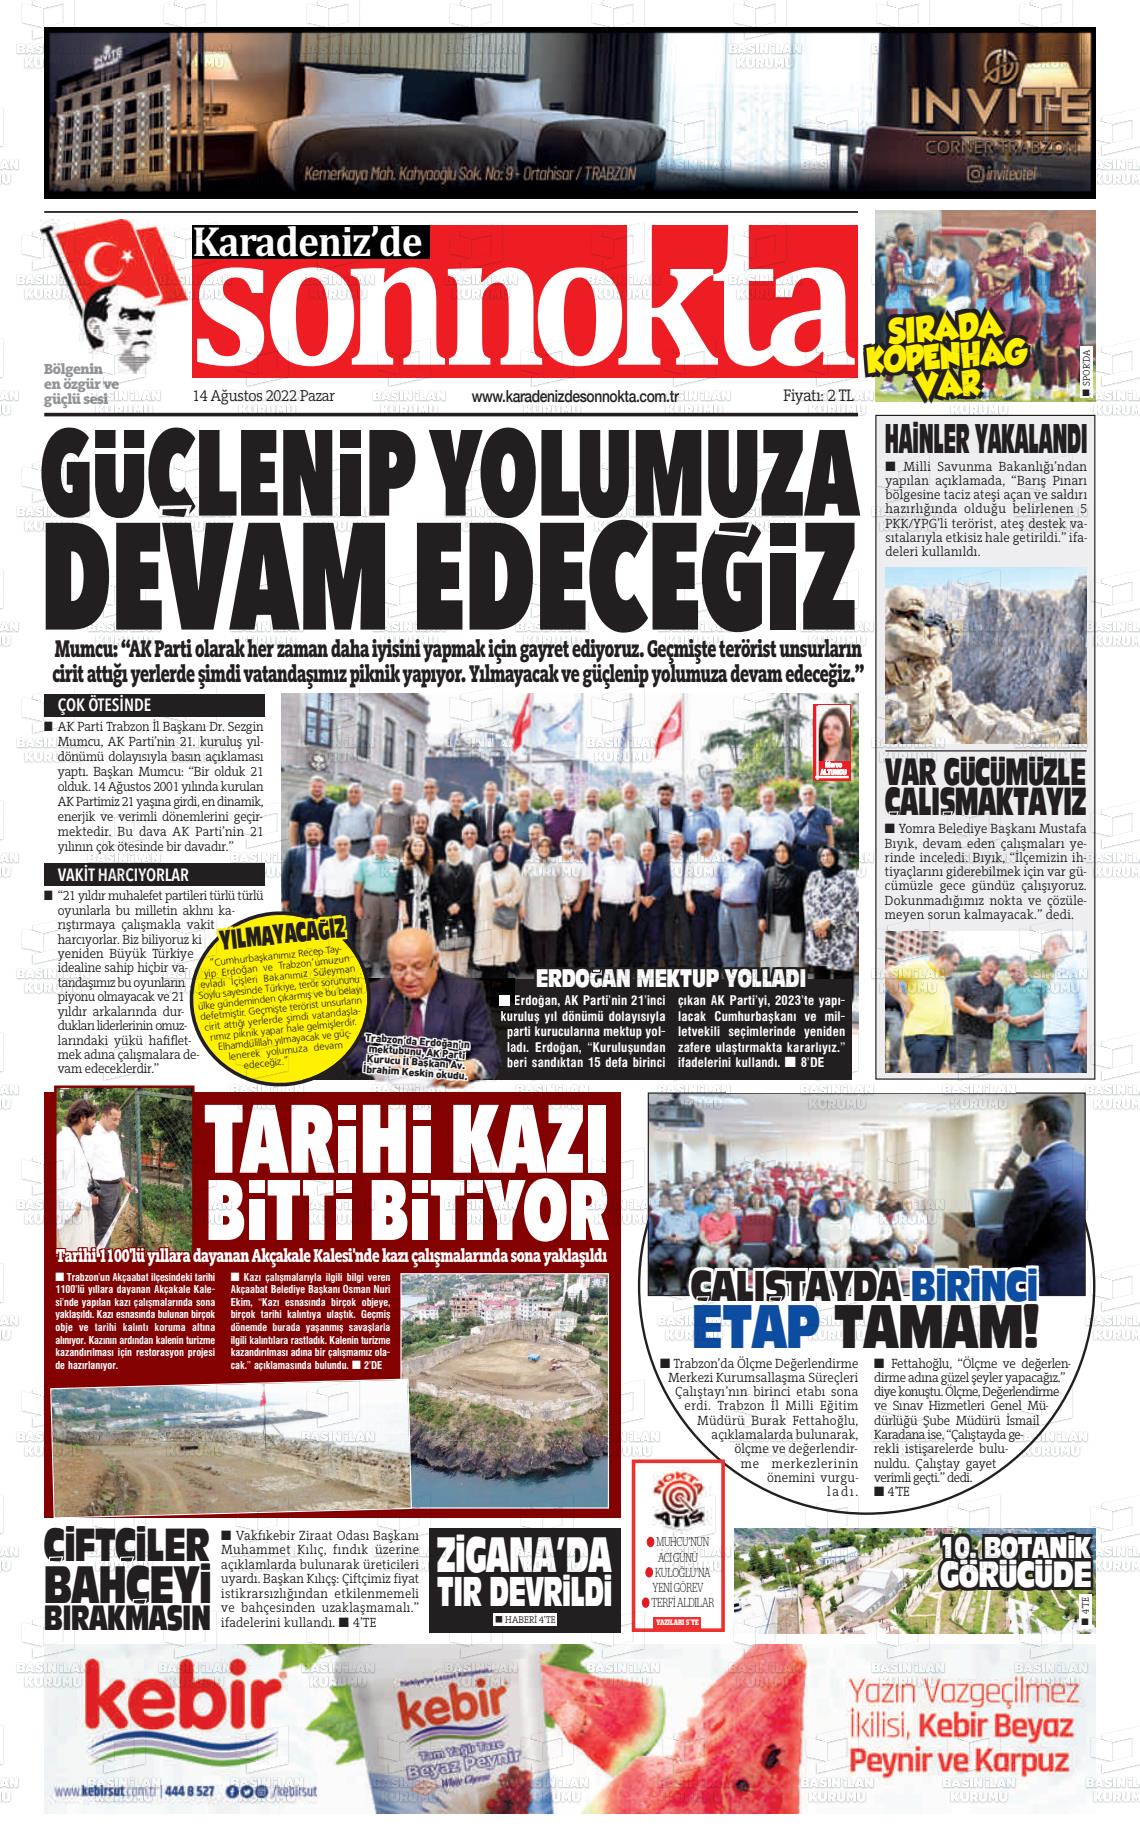 14 Ağustos 2022 Karadeniz'de Sonnokta Gazete Manşeti